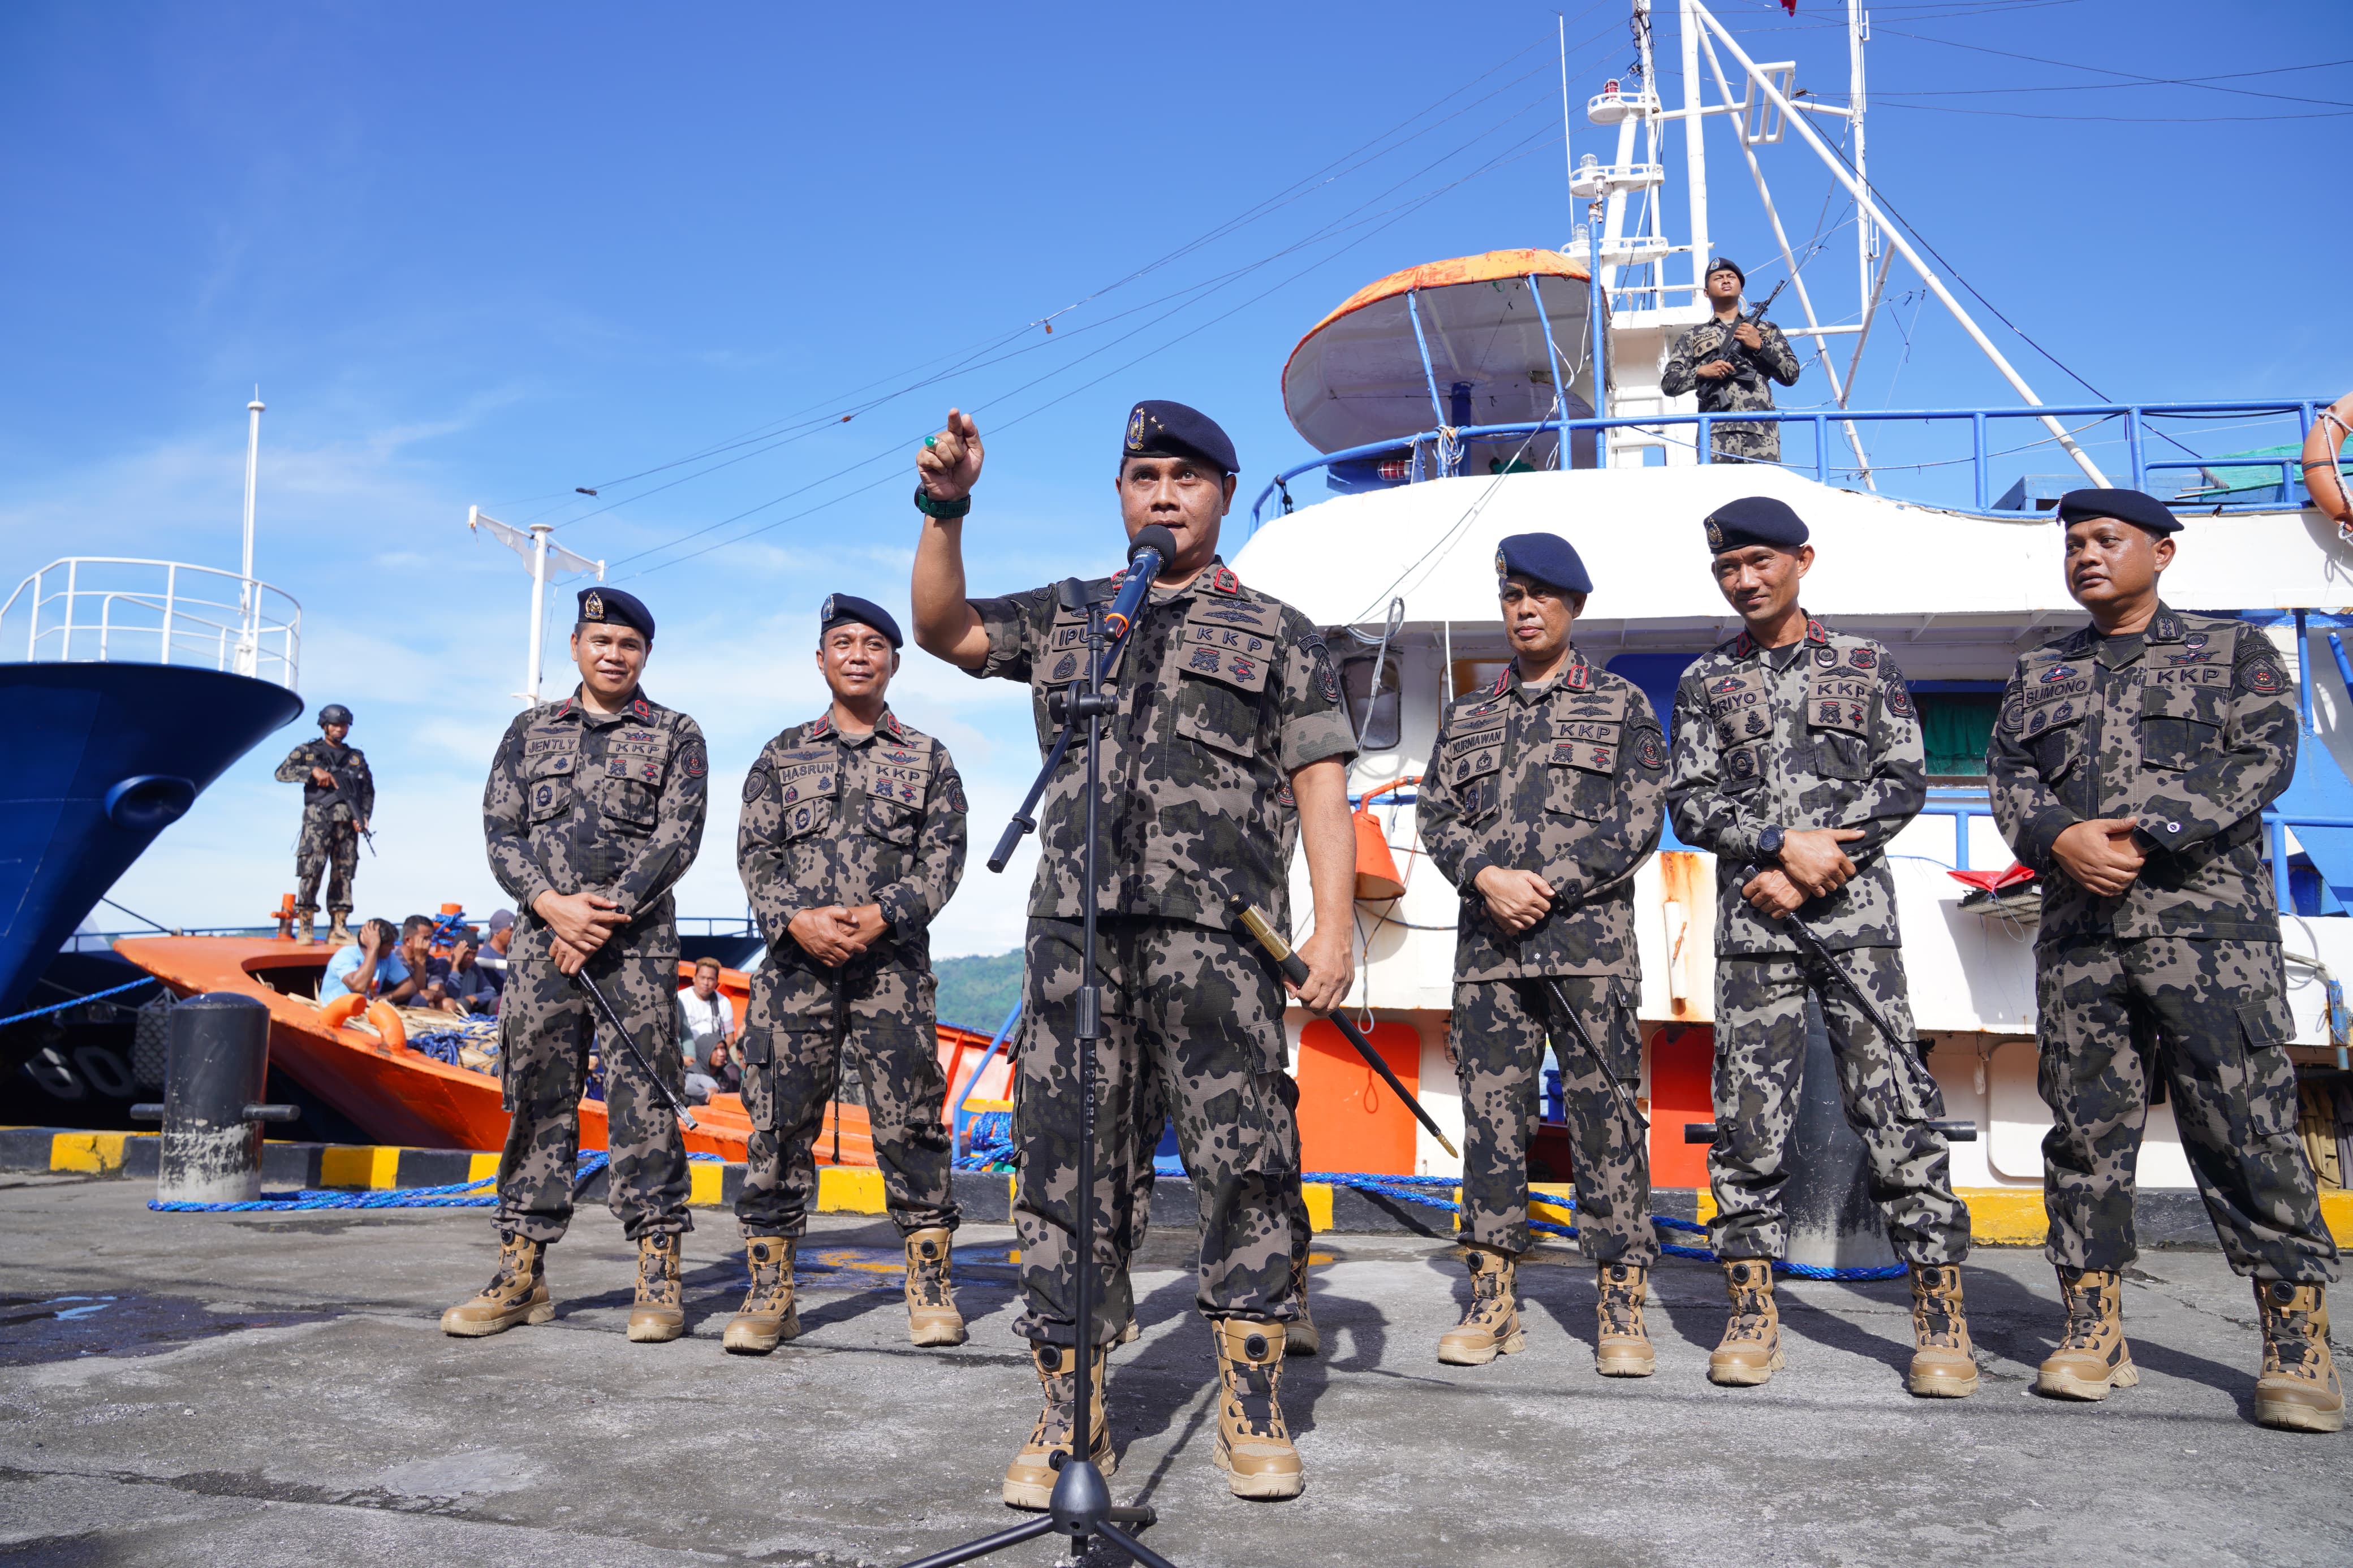 Konferensi Pers Hasil Operasi Pengawasan Sumber Daya Kelautan dan Perikanan dengan Dihentikannya Kapal Ikan Asing Berbendera Filipina di Samudera Pasifik WPP 717